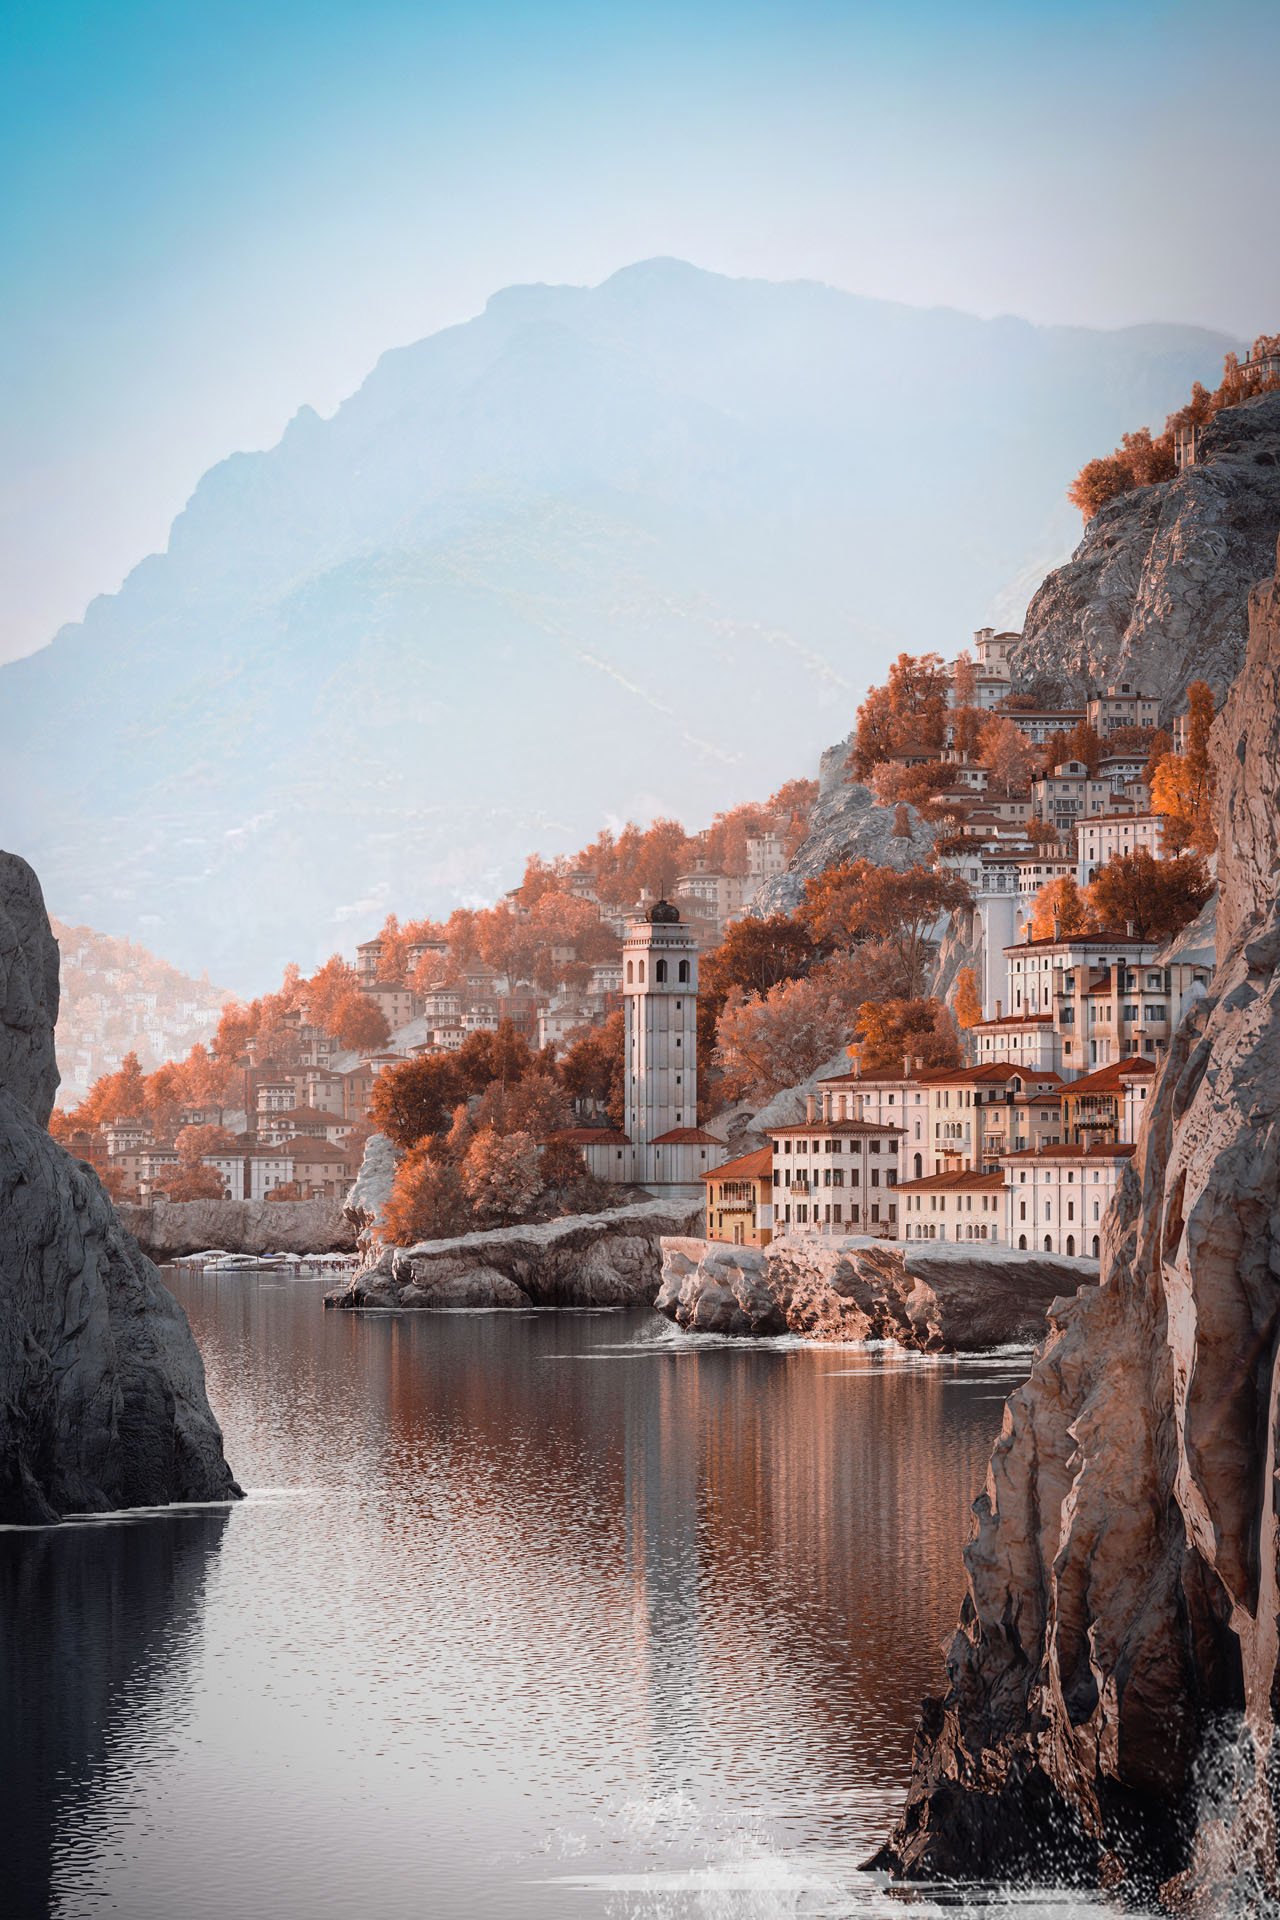 Fall 3D Rendering of Mediterranean-Inspired City